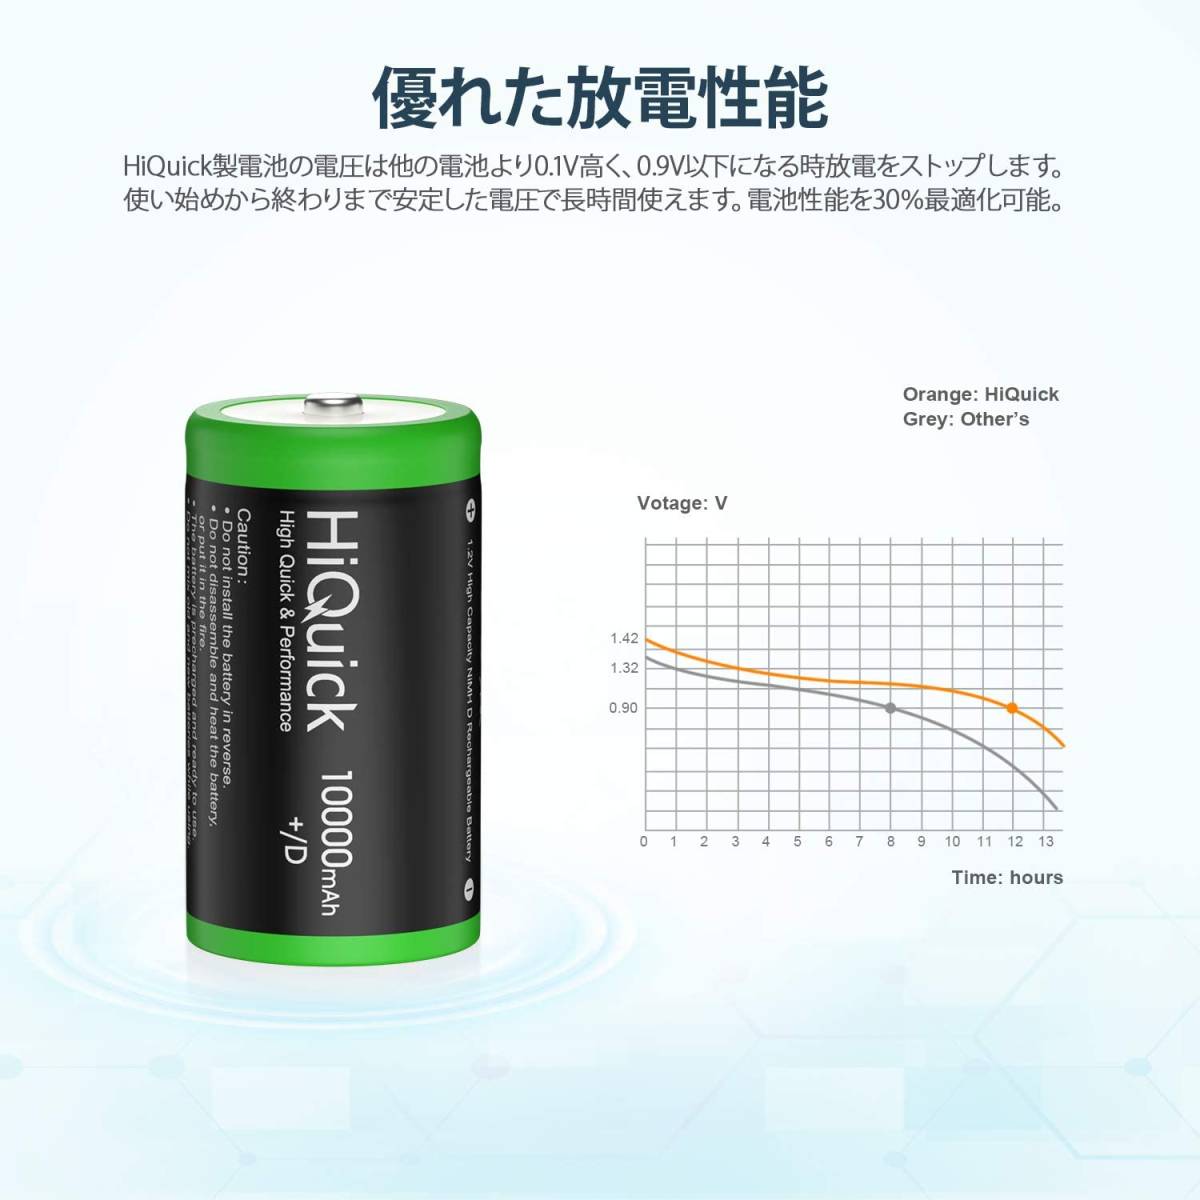 HiQuick 単1形充電池 充電式ニッケル水素電池 高容量10000mAh 単1電池 4本入り ケース2個付き 約1200回使用_画像2